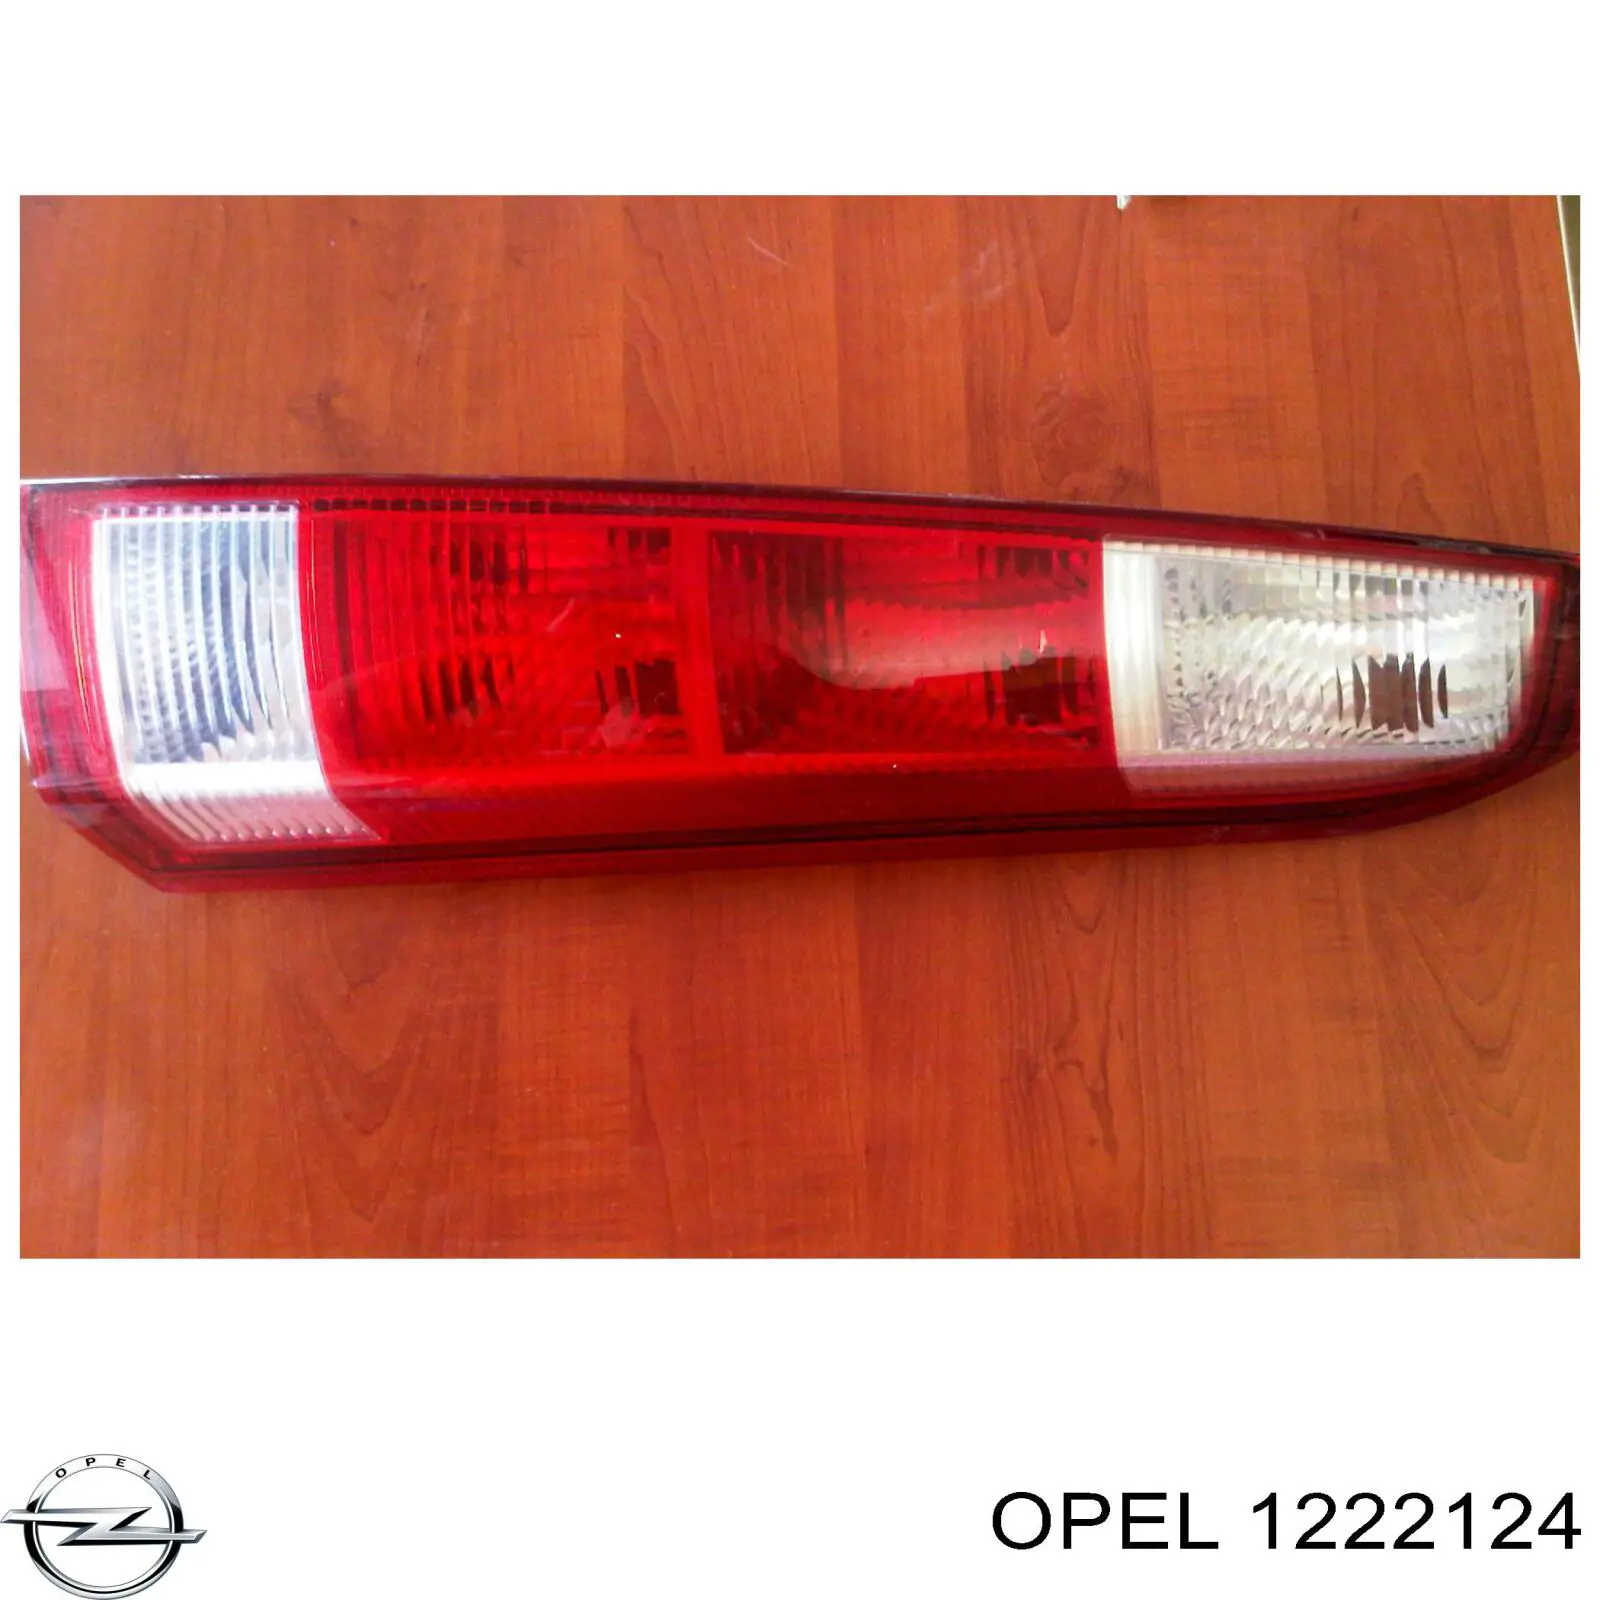 1222086 Opel piloto posterior derecho